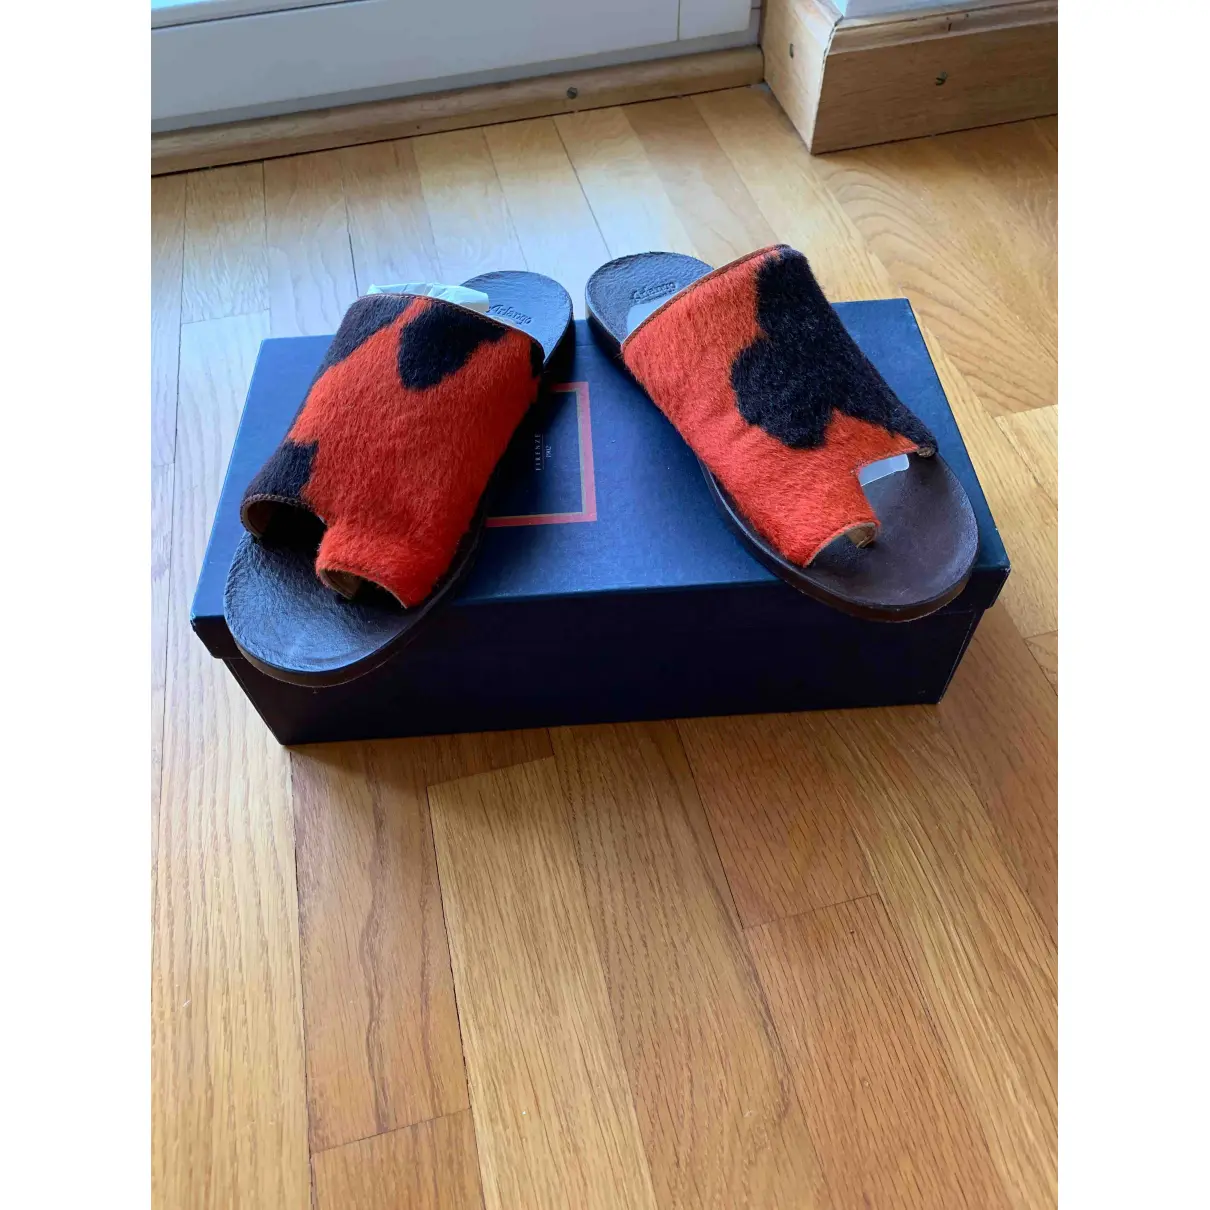 Buy Arfango Leather flip flops online